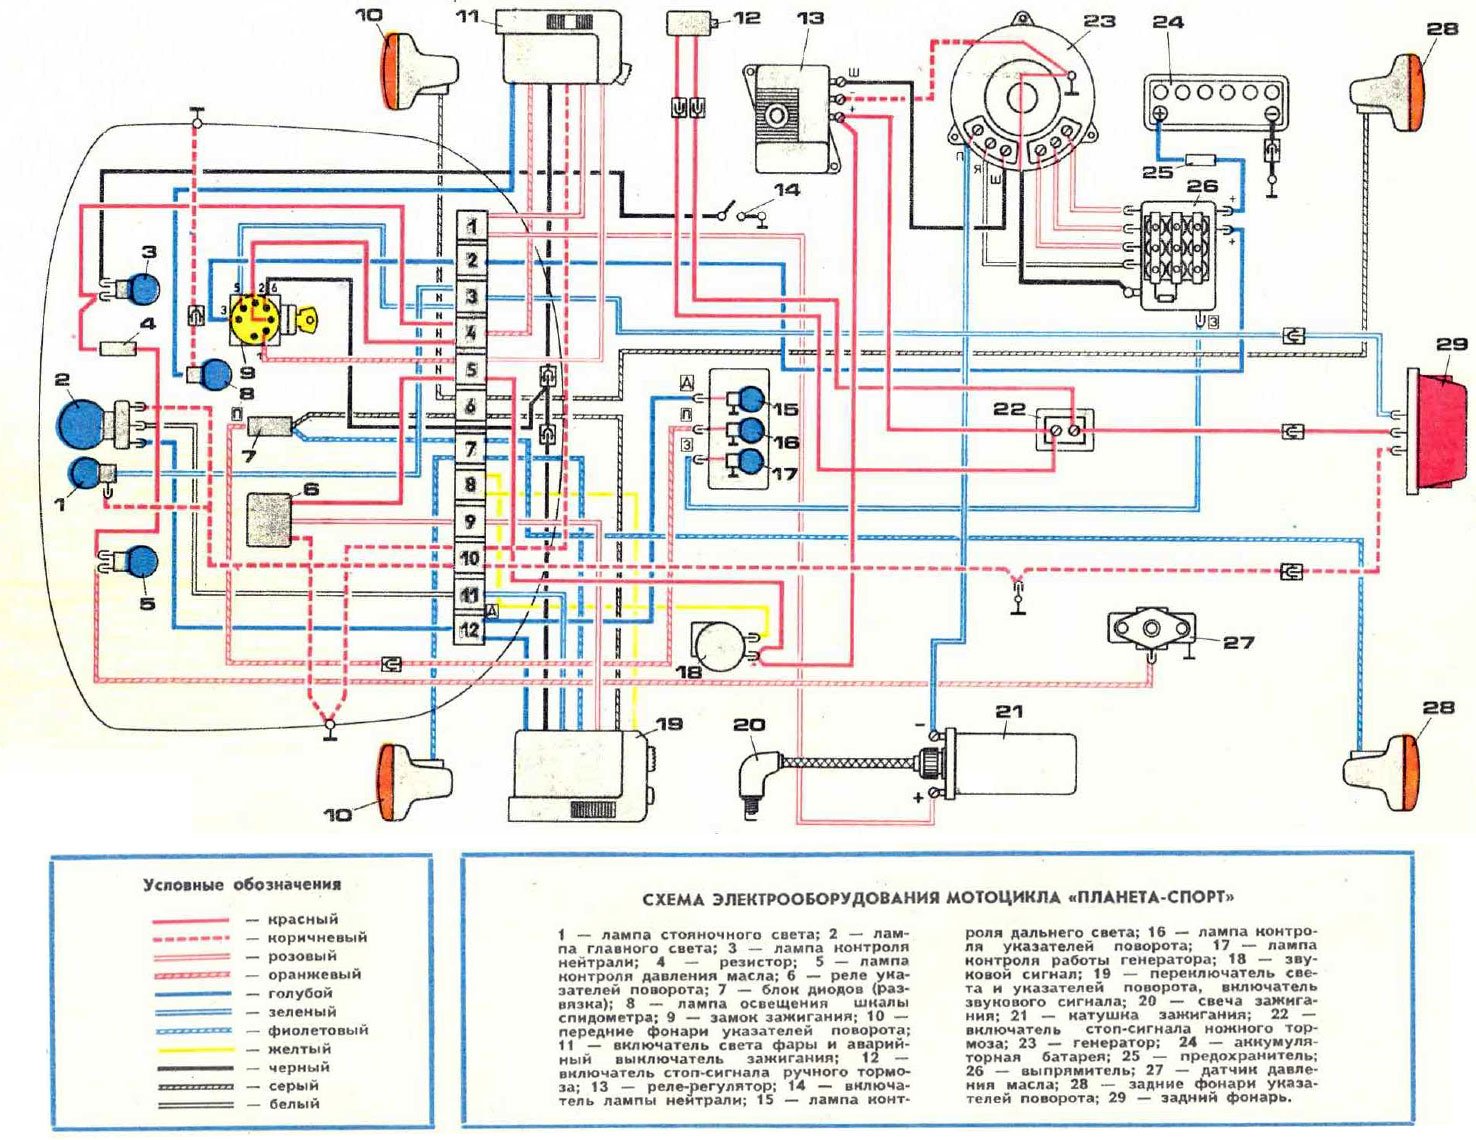 Подключение зажигания иж планета 5. Схема электрооборудования ИЖ Планета спорт 1978-1984. Электрическая схема мотоцикла ИЖ Планета 5. Схема подключения проводки ИЖ Планета спорт. Схема электрооборудования ИЖ Юпитер 5.